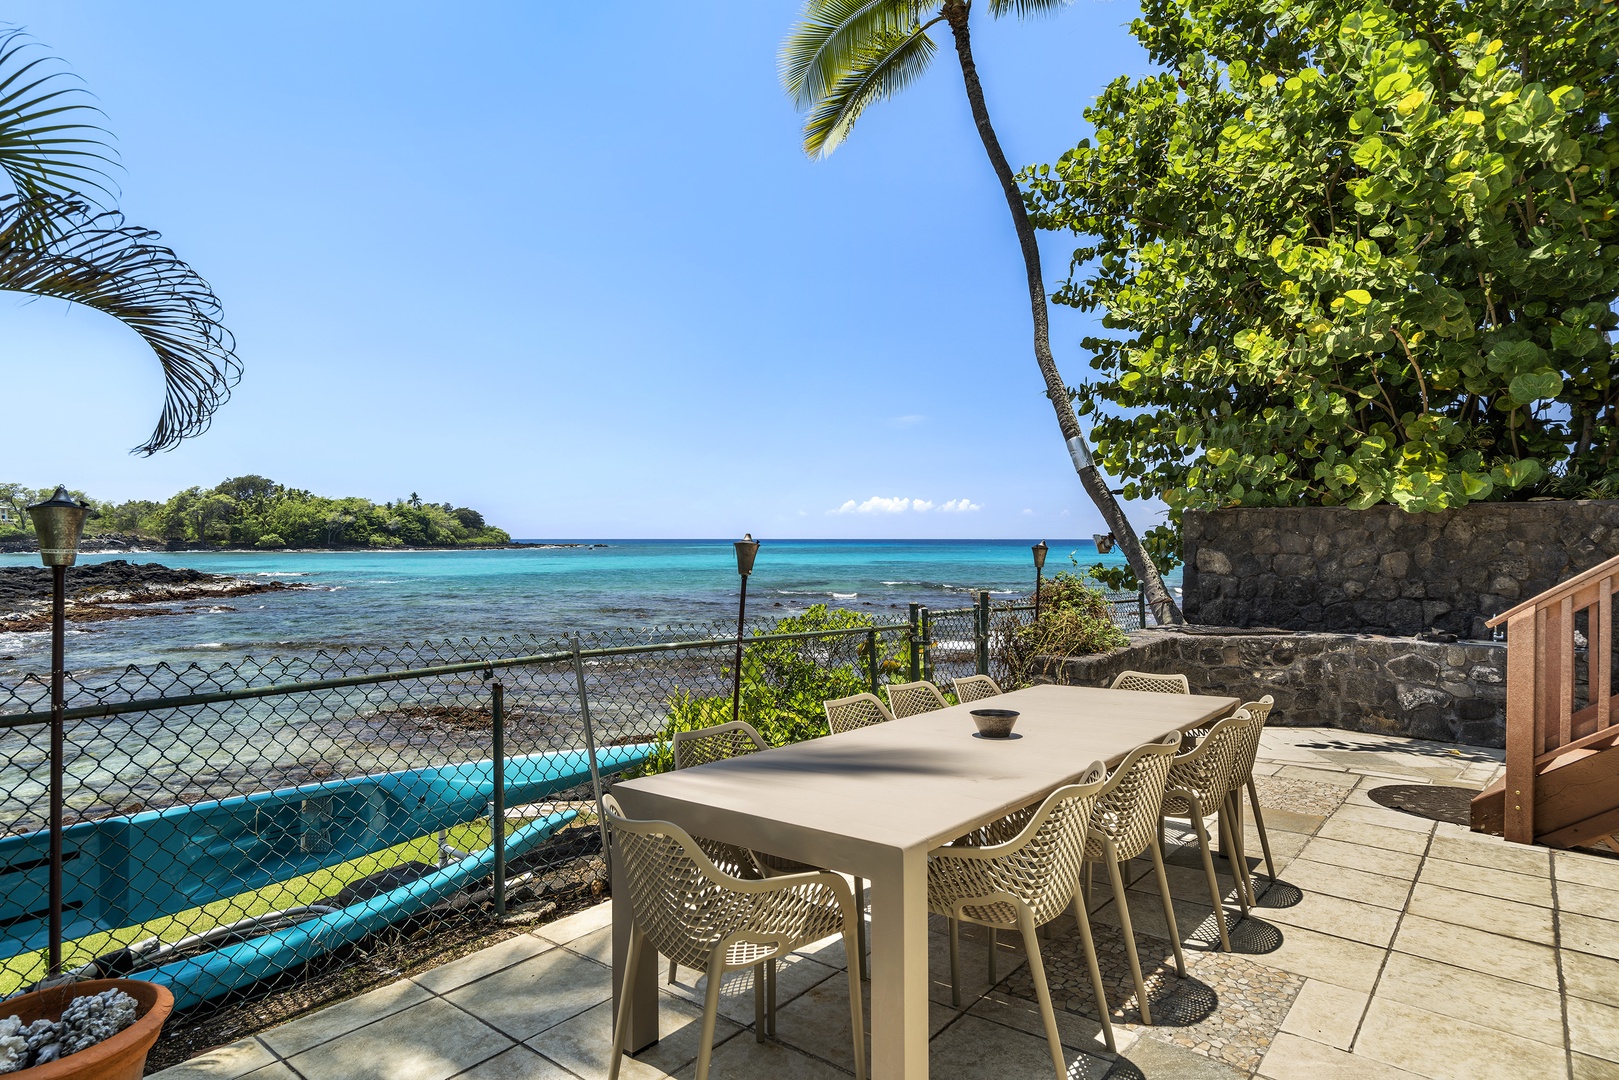 Kailua Kona Vacation Rentals, Kona's Shangri La - Seating for 10 at the waters edge!